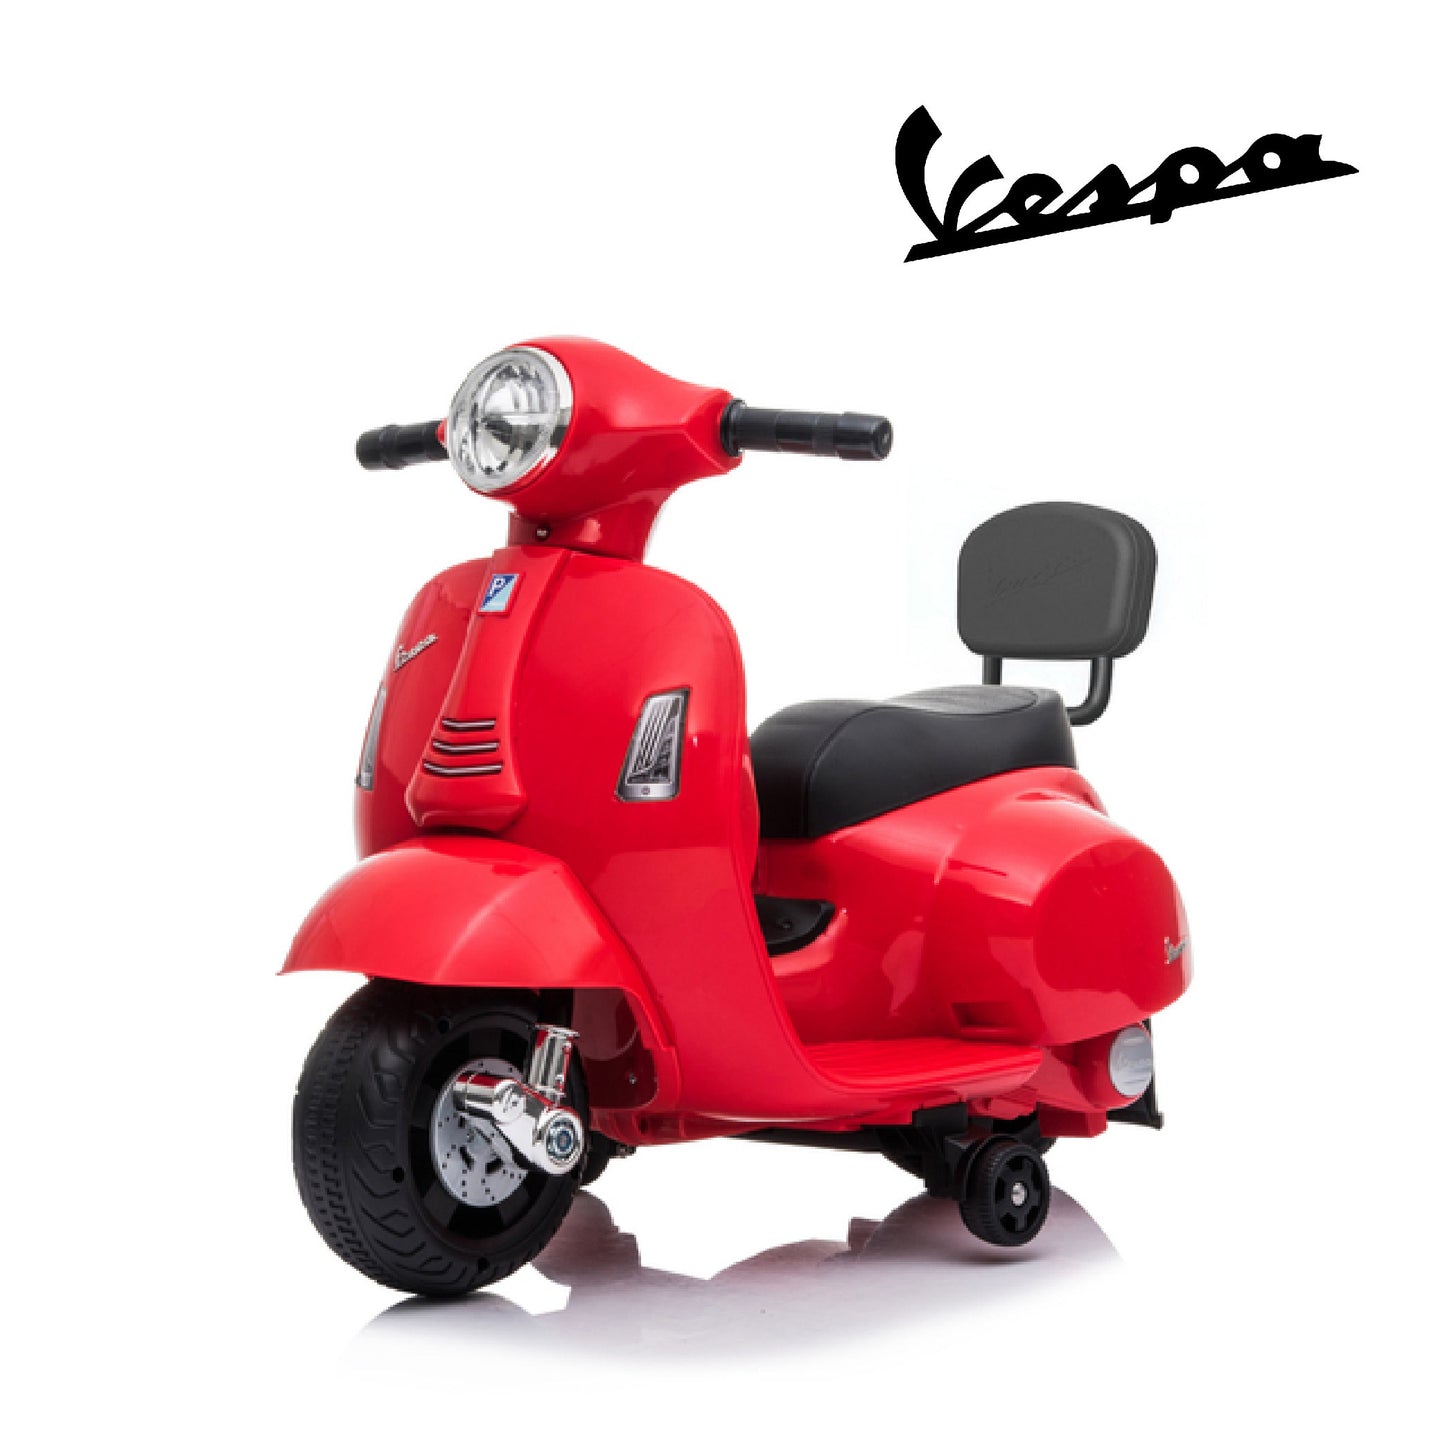 [Vespa] Electric toy car backrest model - 3 colors available